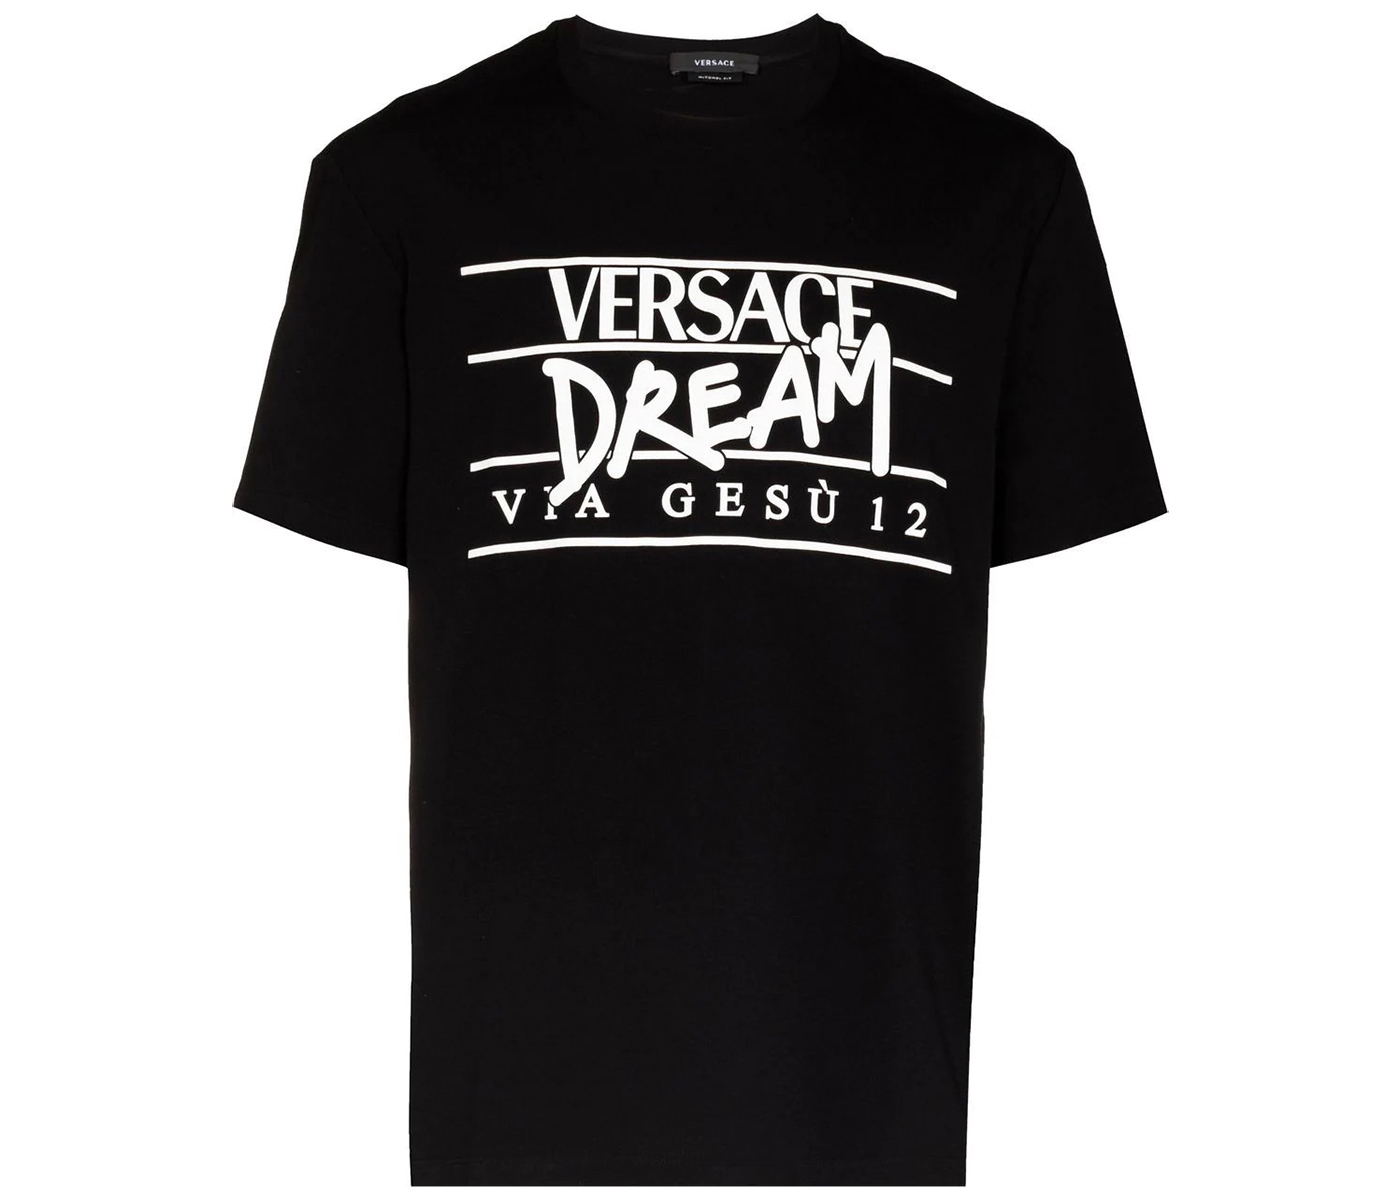 Versace Dream T-shirt Black